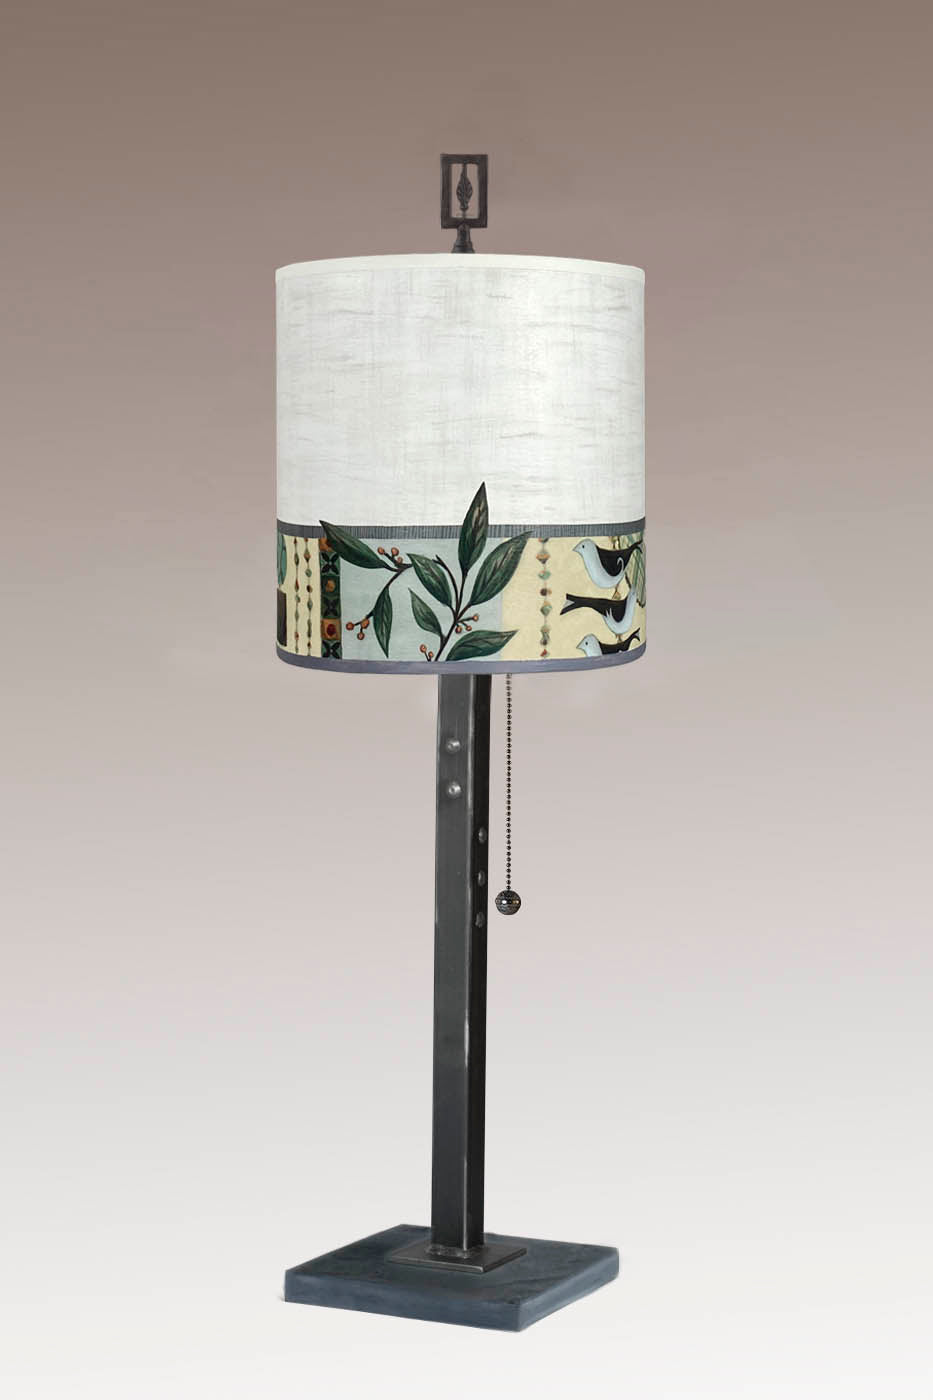 Janna Ugone & Co Table Lamp Steel Table Lamp Medium Drum Shade in New Capri Opal